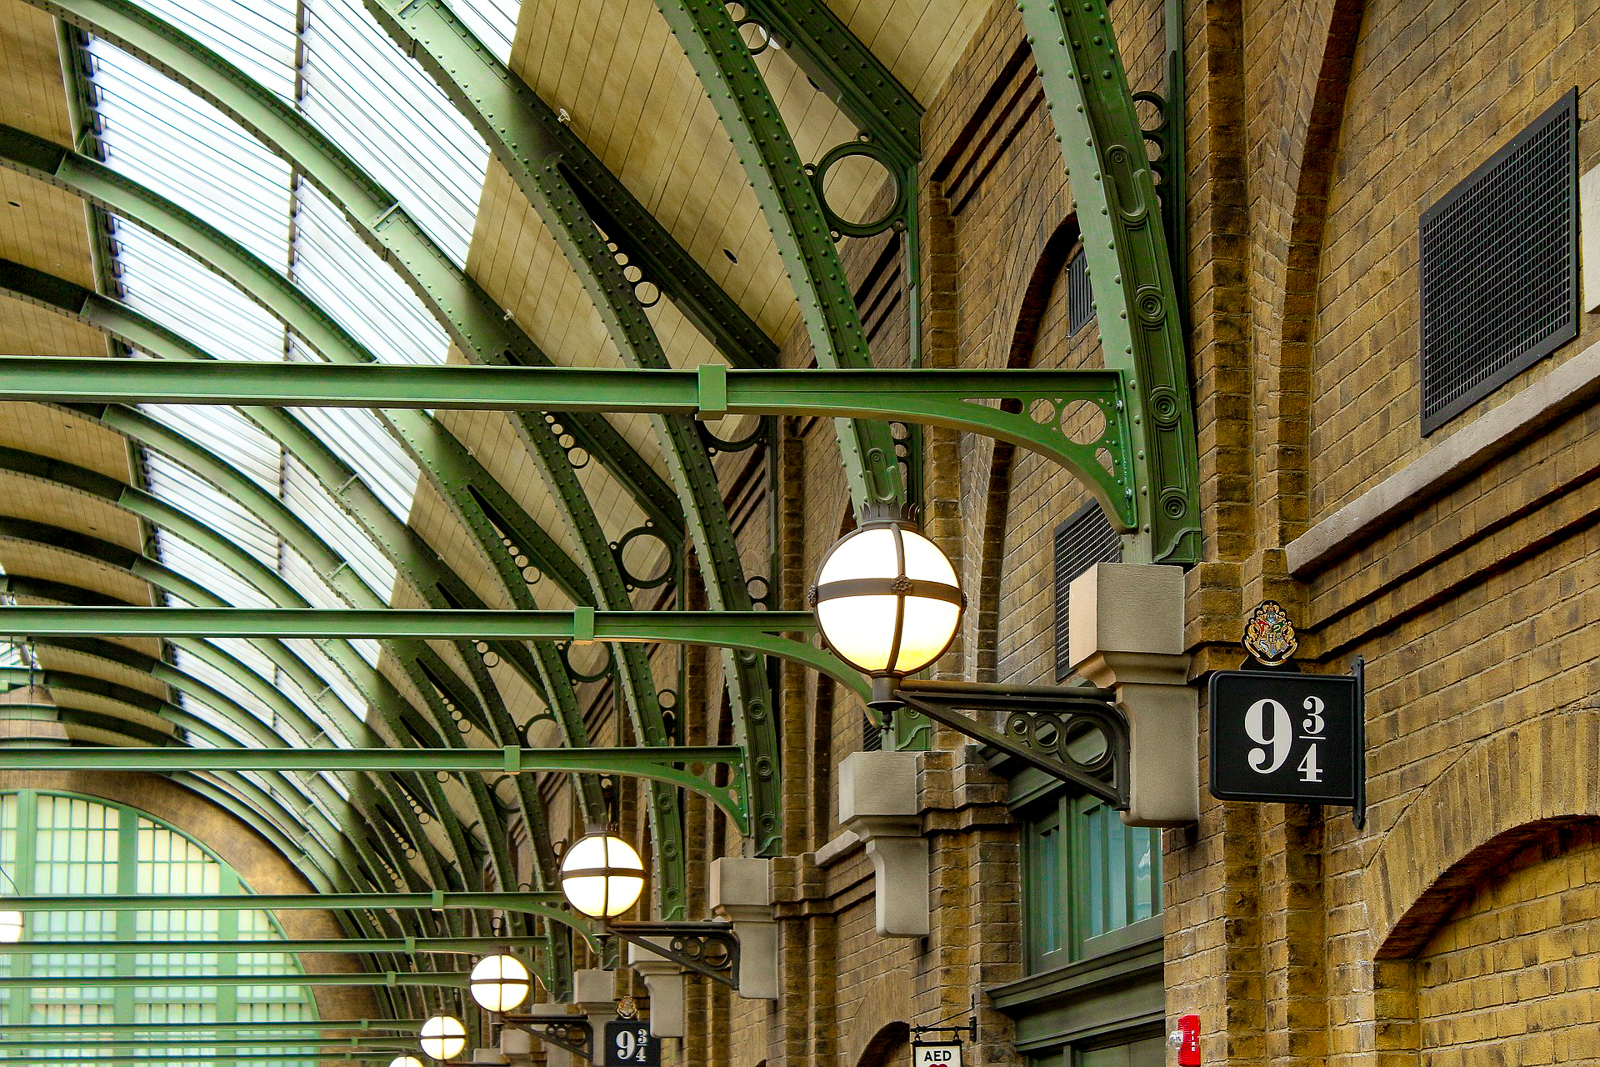 Platform 9 &3/4 at King's Cross Station in London